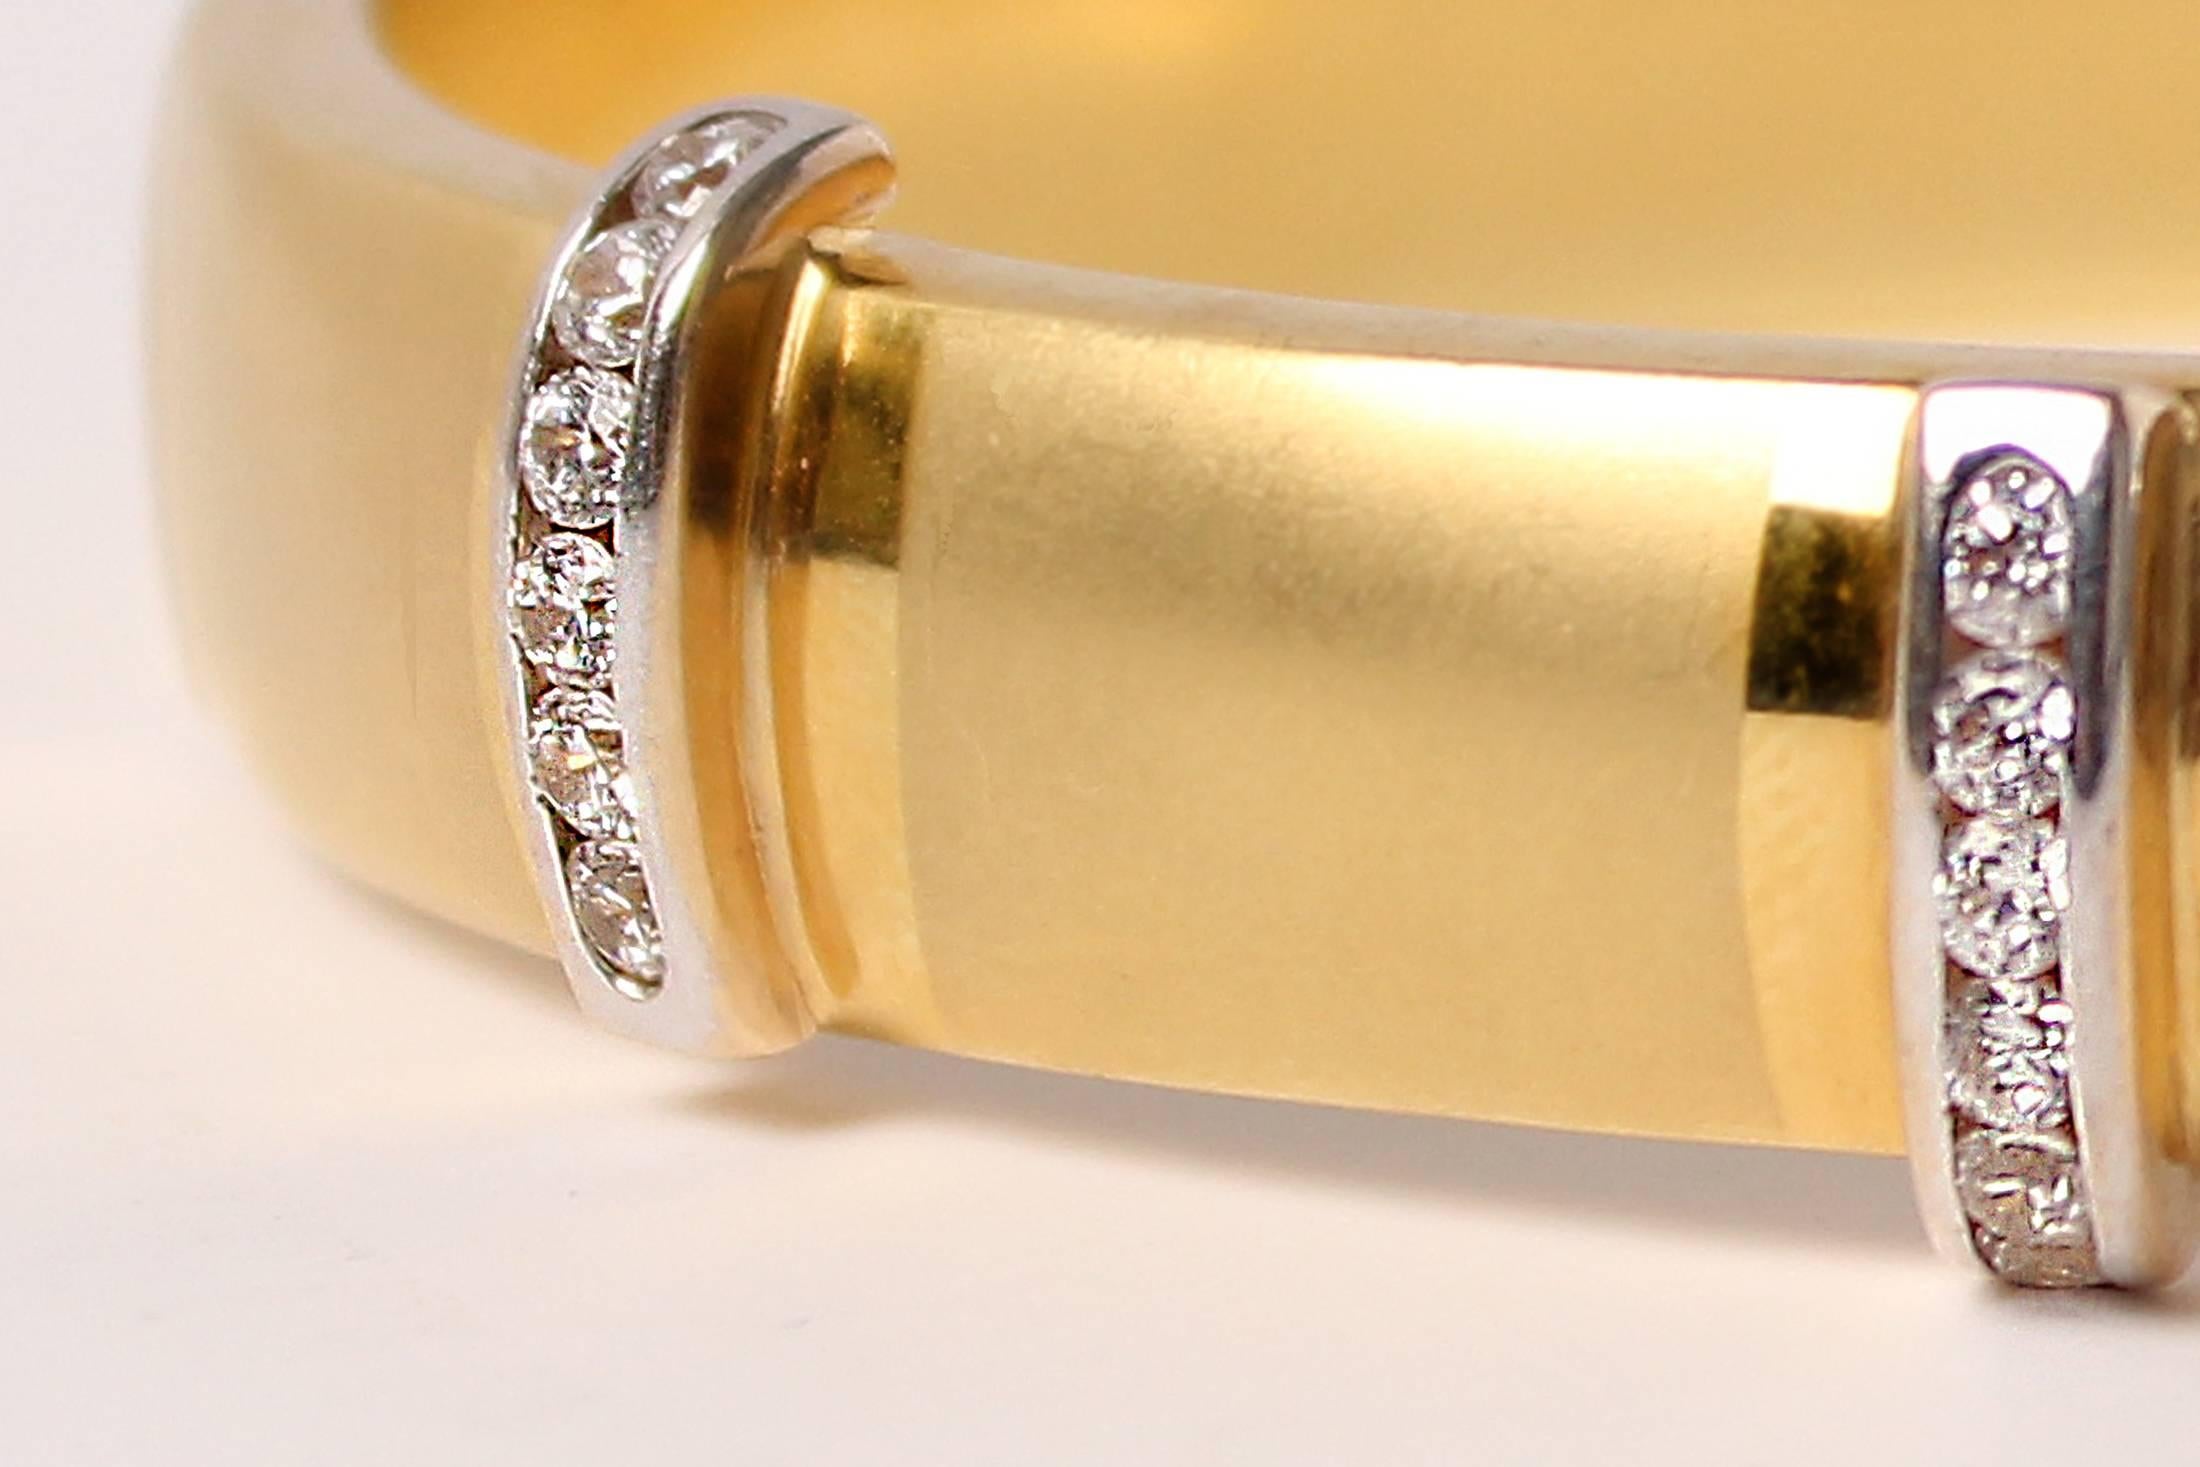 Contemporary Clarissa Bronfman Antique 18 Karat Gold and Diamond Bracelet